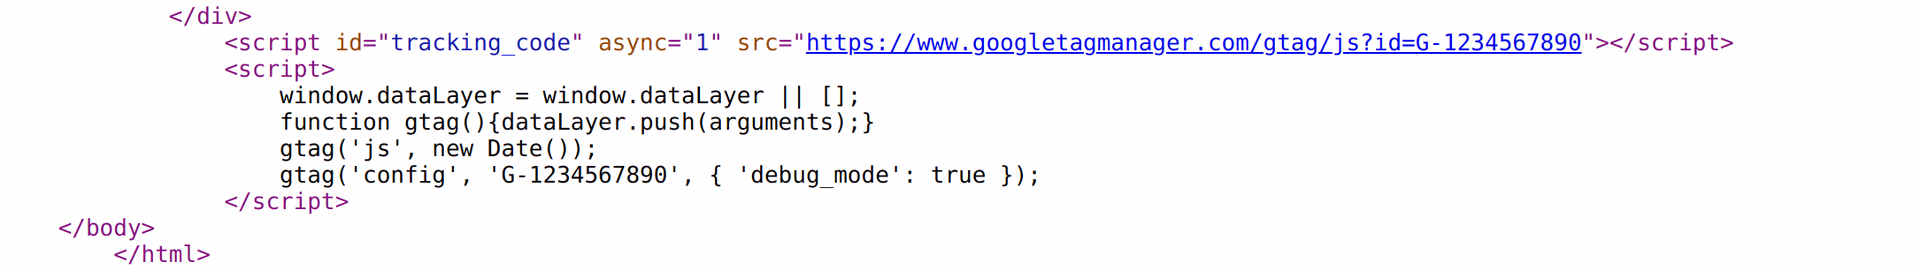 Odoo 14.0 Google Analytics 4 Global Site Tag (gtag.js) global site tag script code